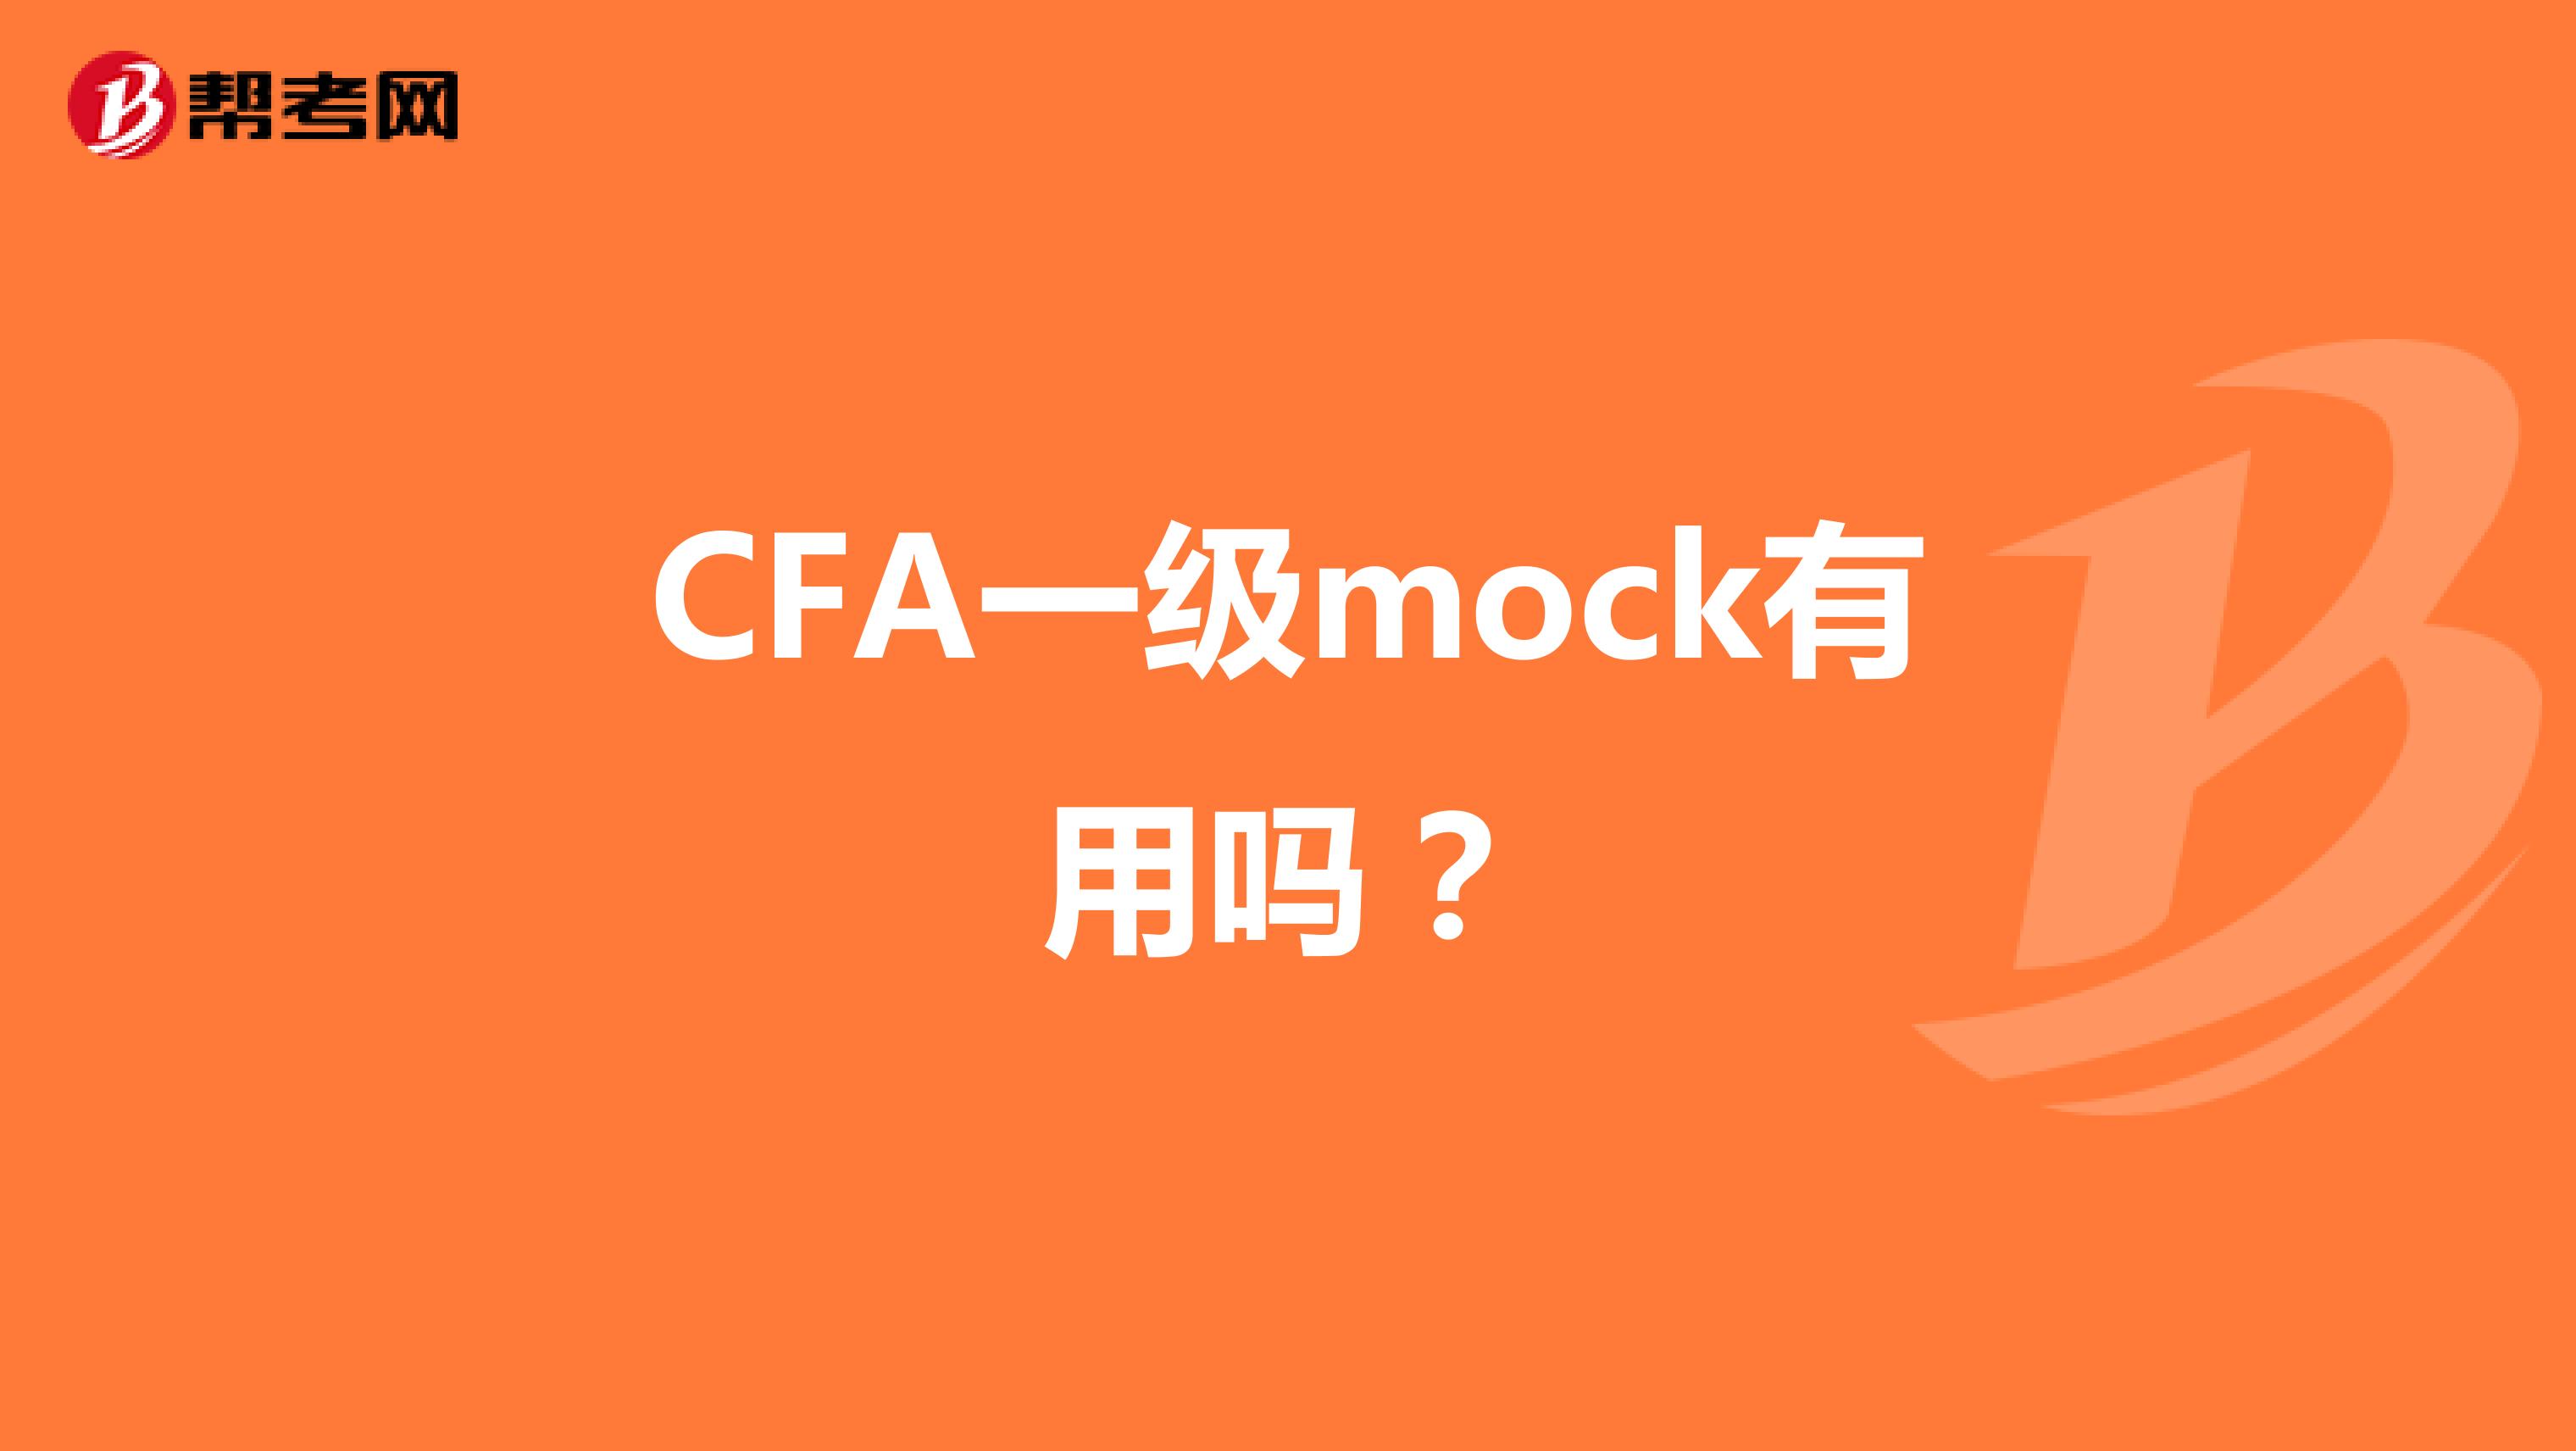 CFA一級mock有用嗎？